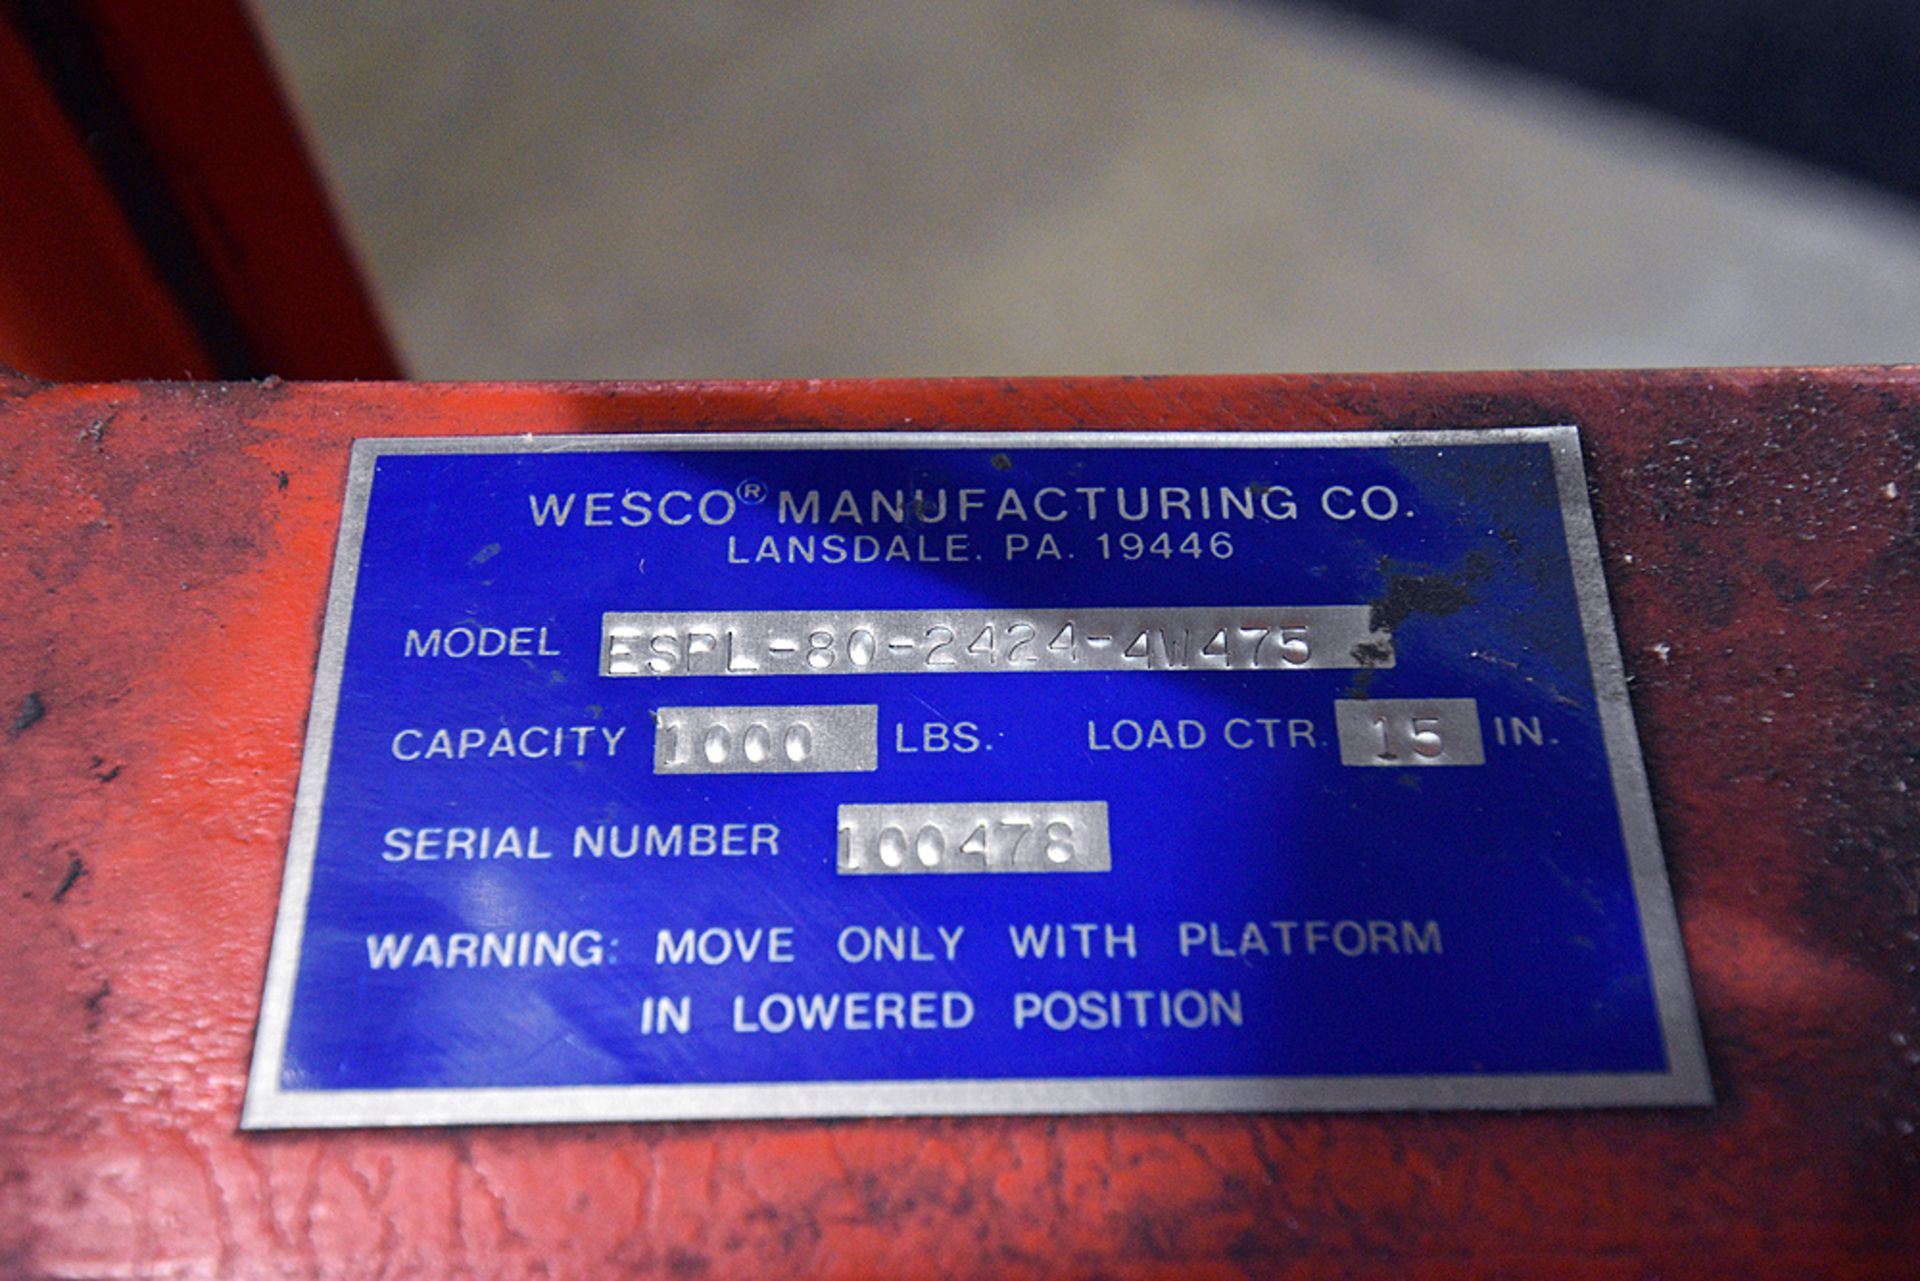 Wesco model ESPL-80-2424-4W475 portable hydraulic lift, s/n 100476, 1,000 lb. capacity - Image 3 of 3